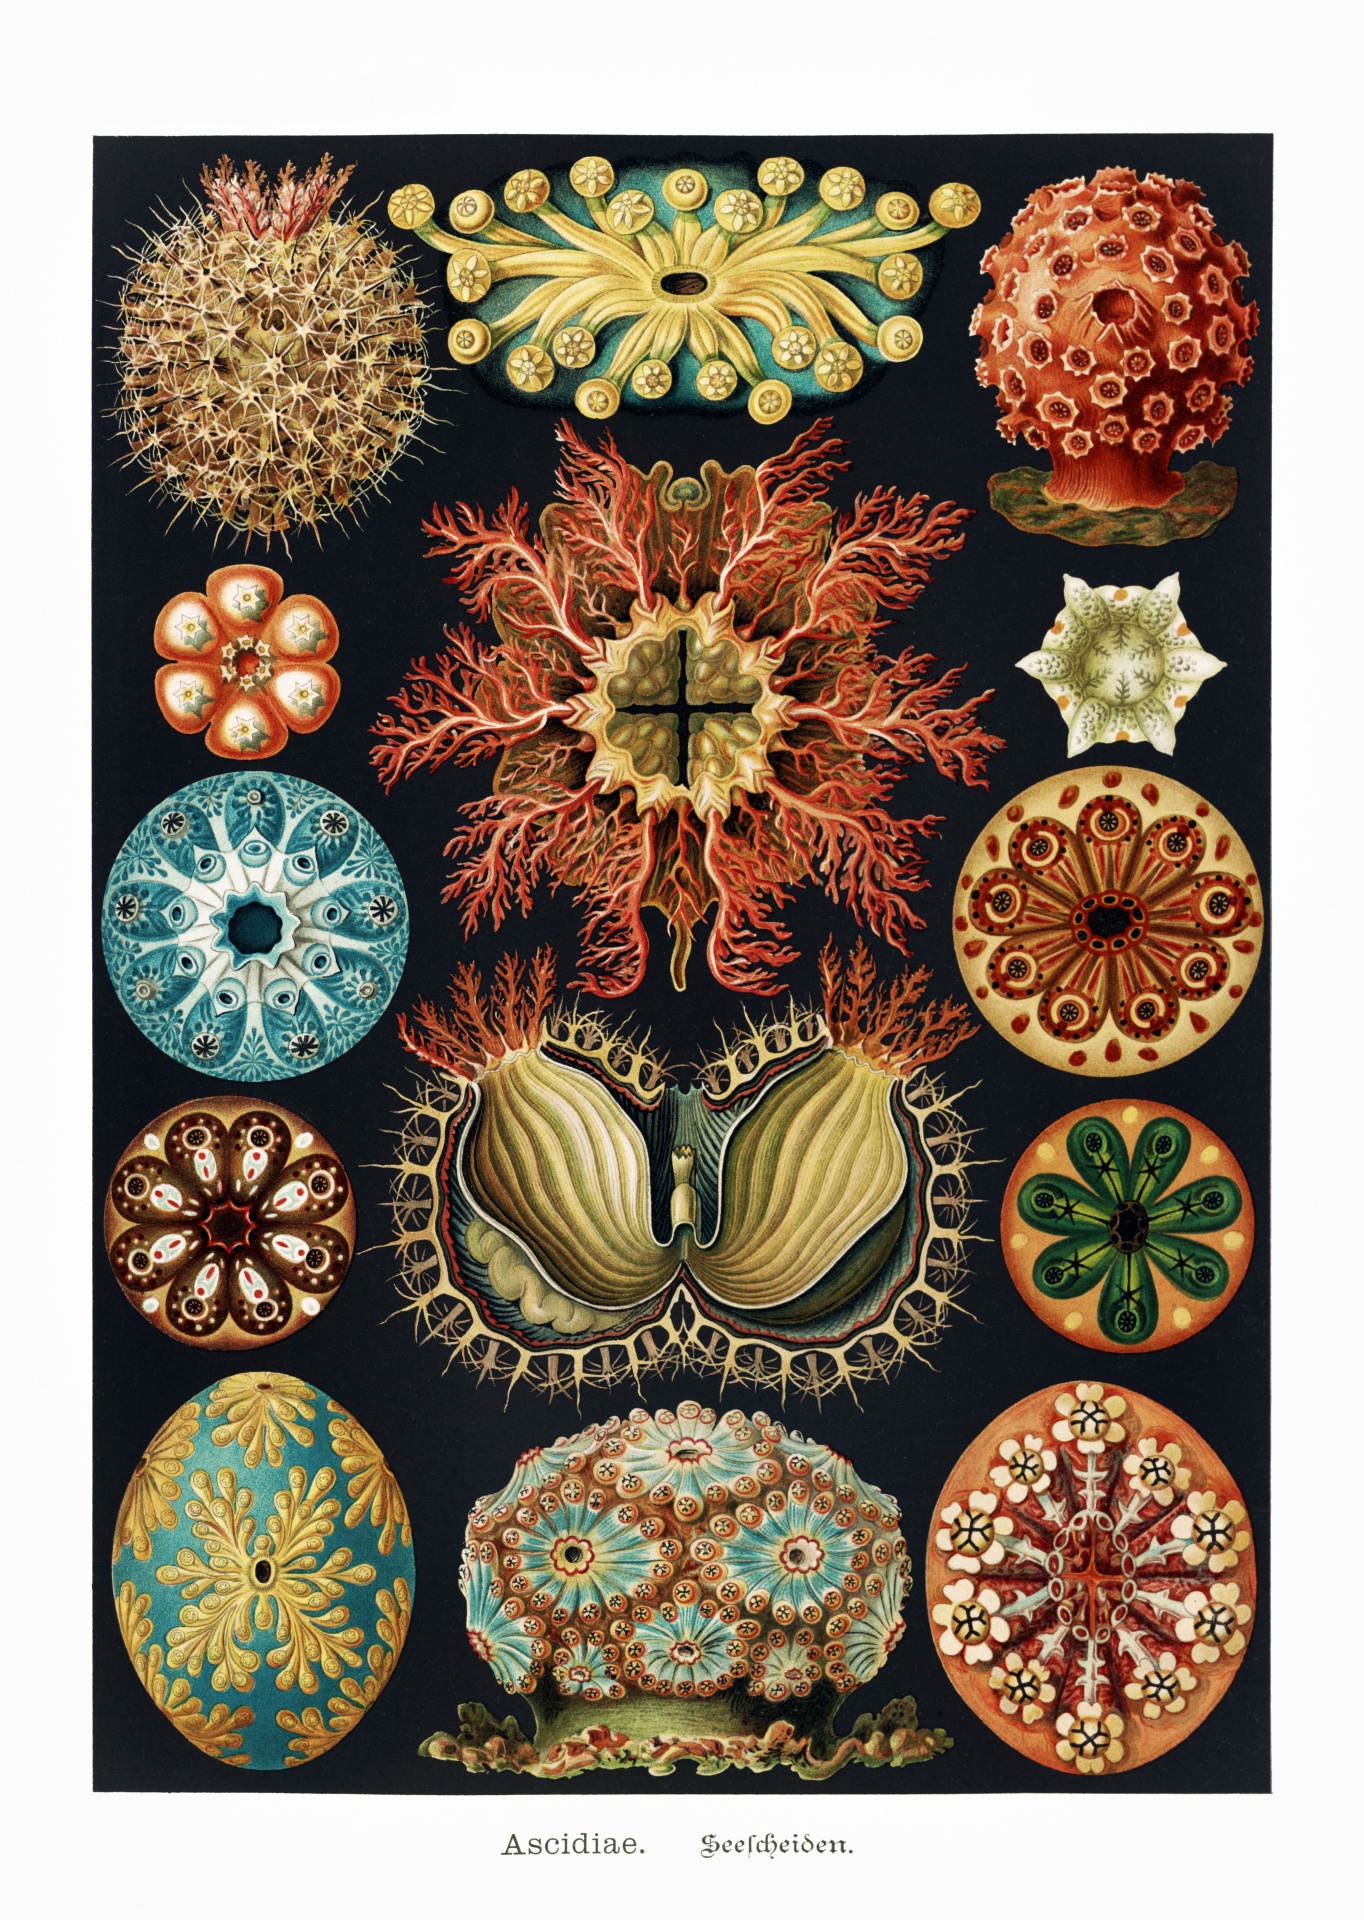 Starfish Sea Urchin Coral Vintage